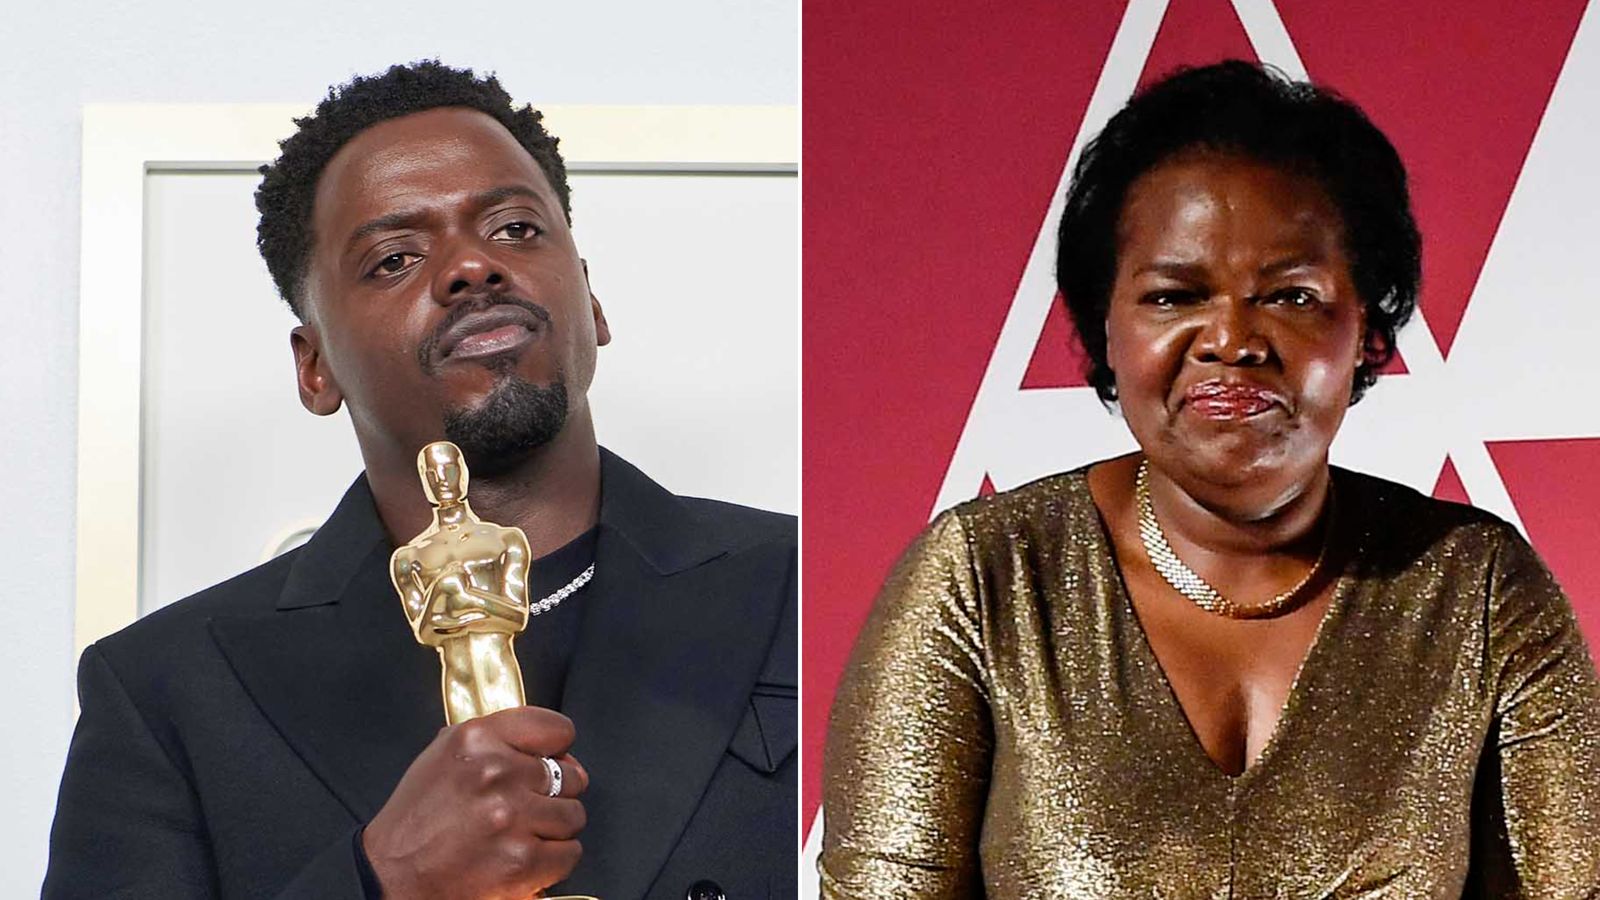 Daniel Kaluuya's Oscars speech mentioned his mom's sex life. She wasn't  happy | CNN